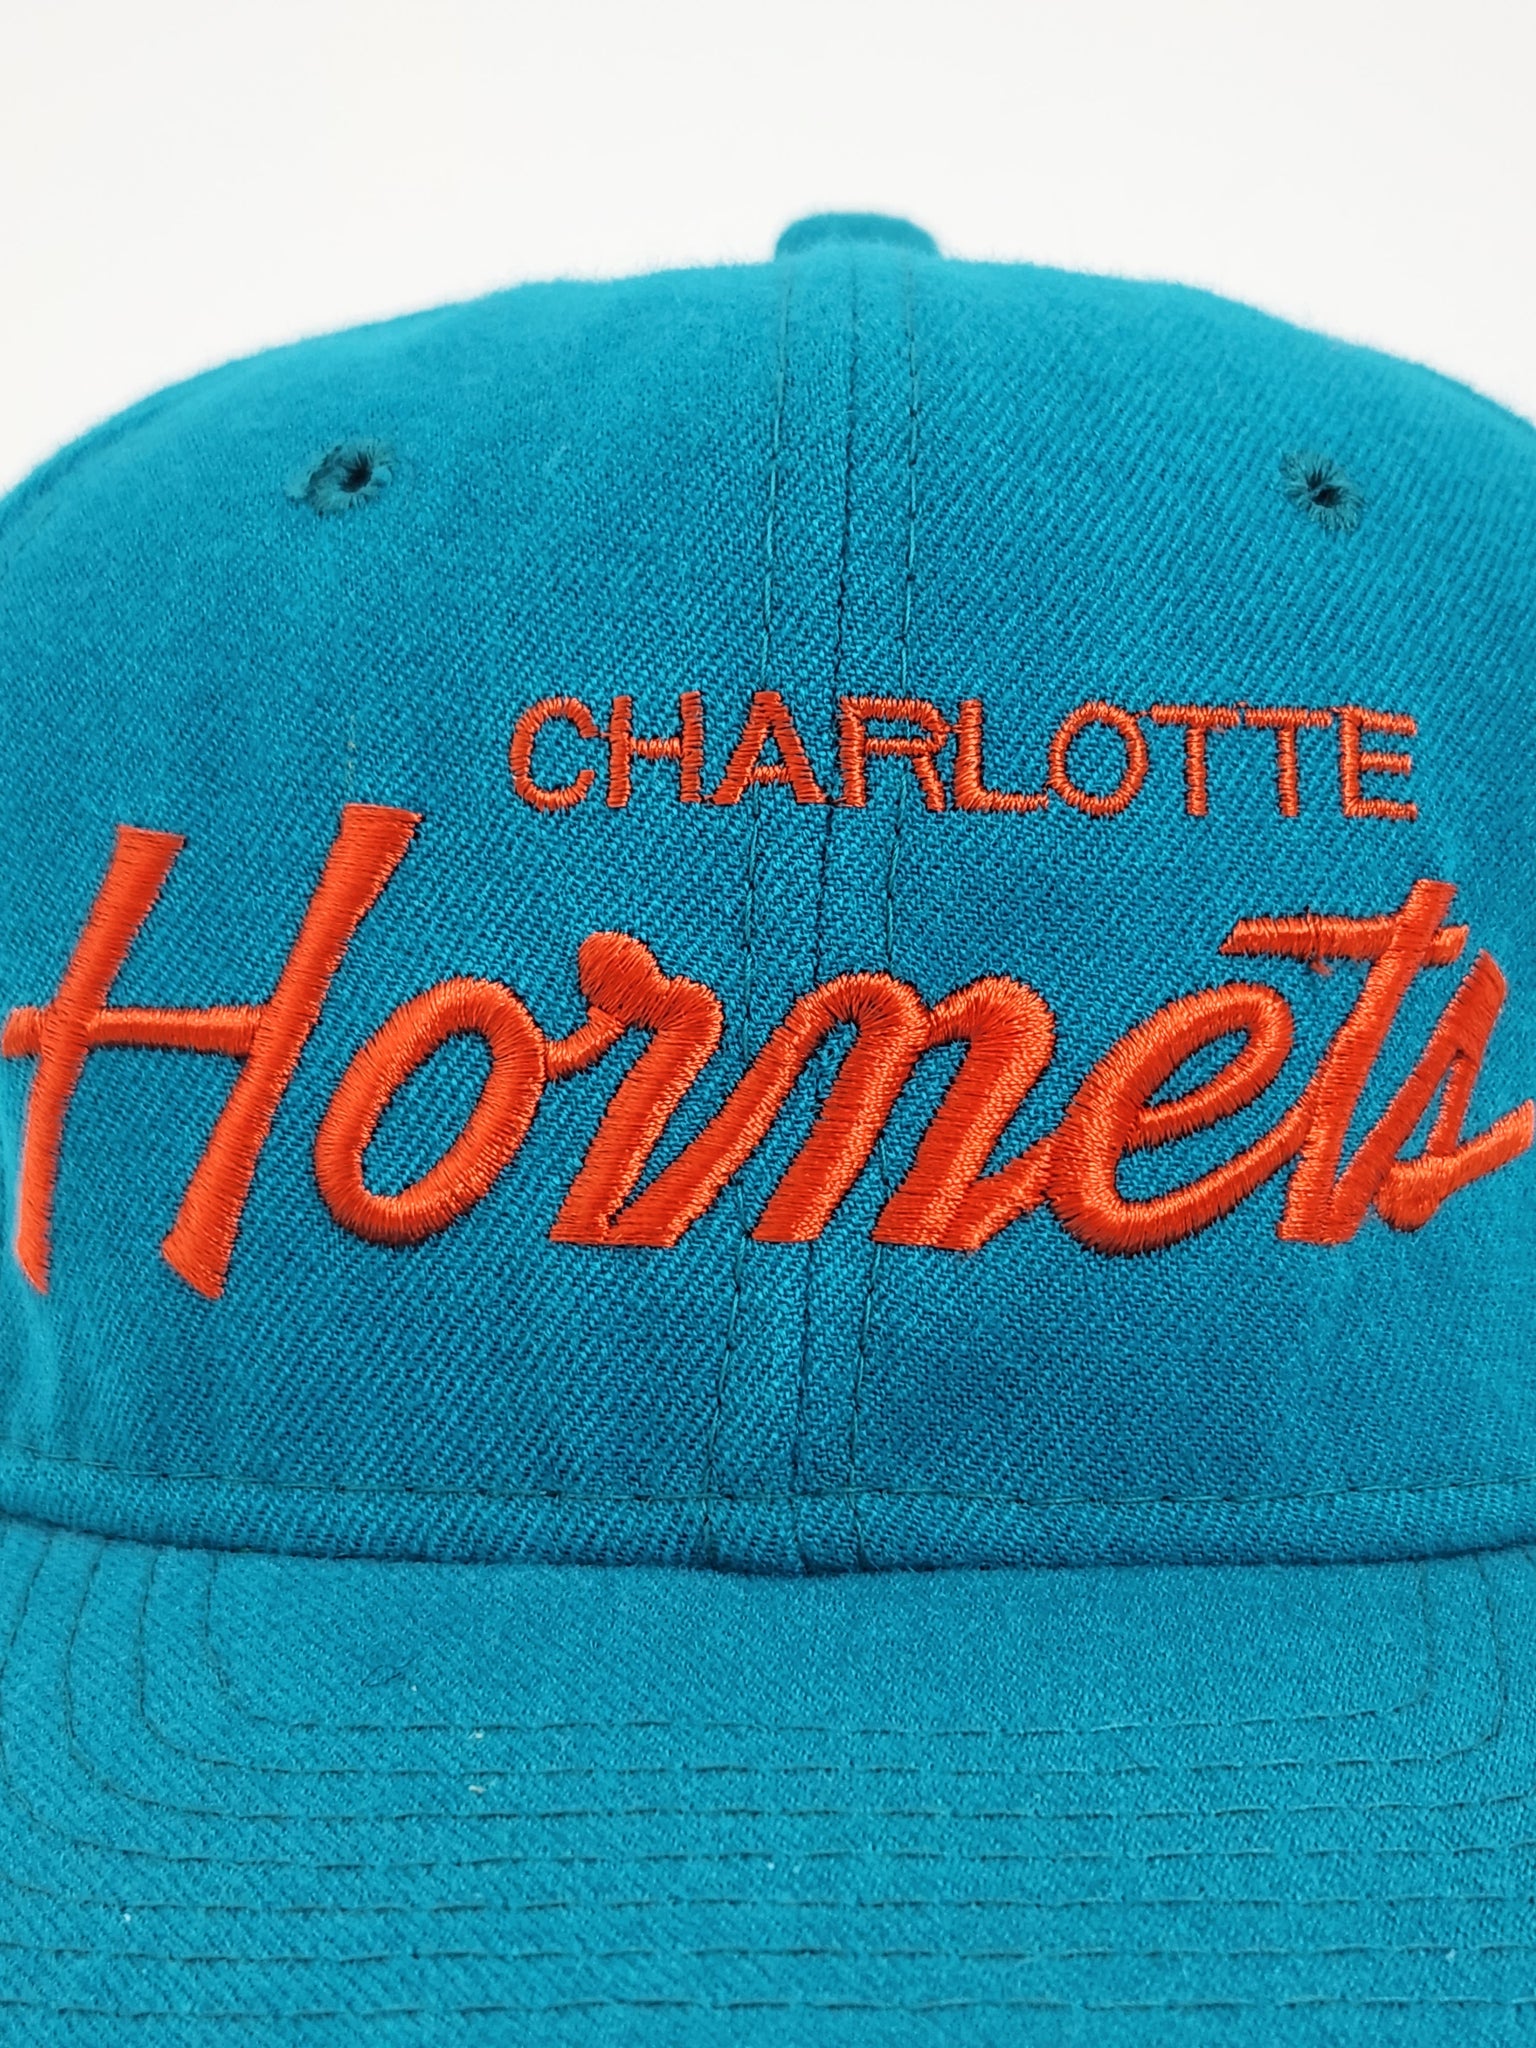 90s Charlotte Hornets NBA Snapback Hat